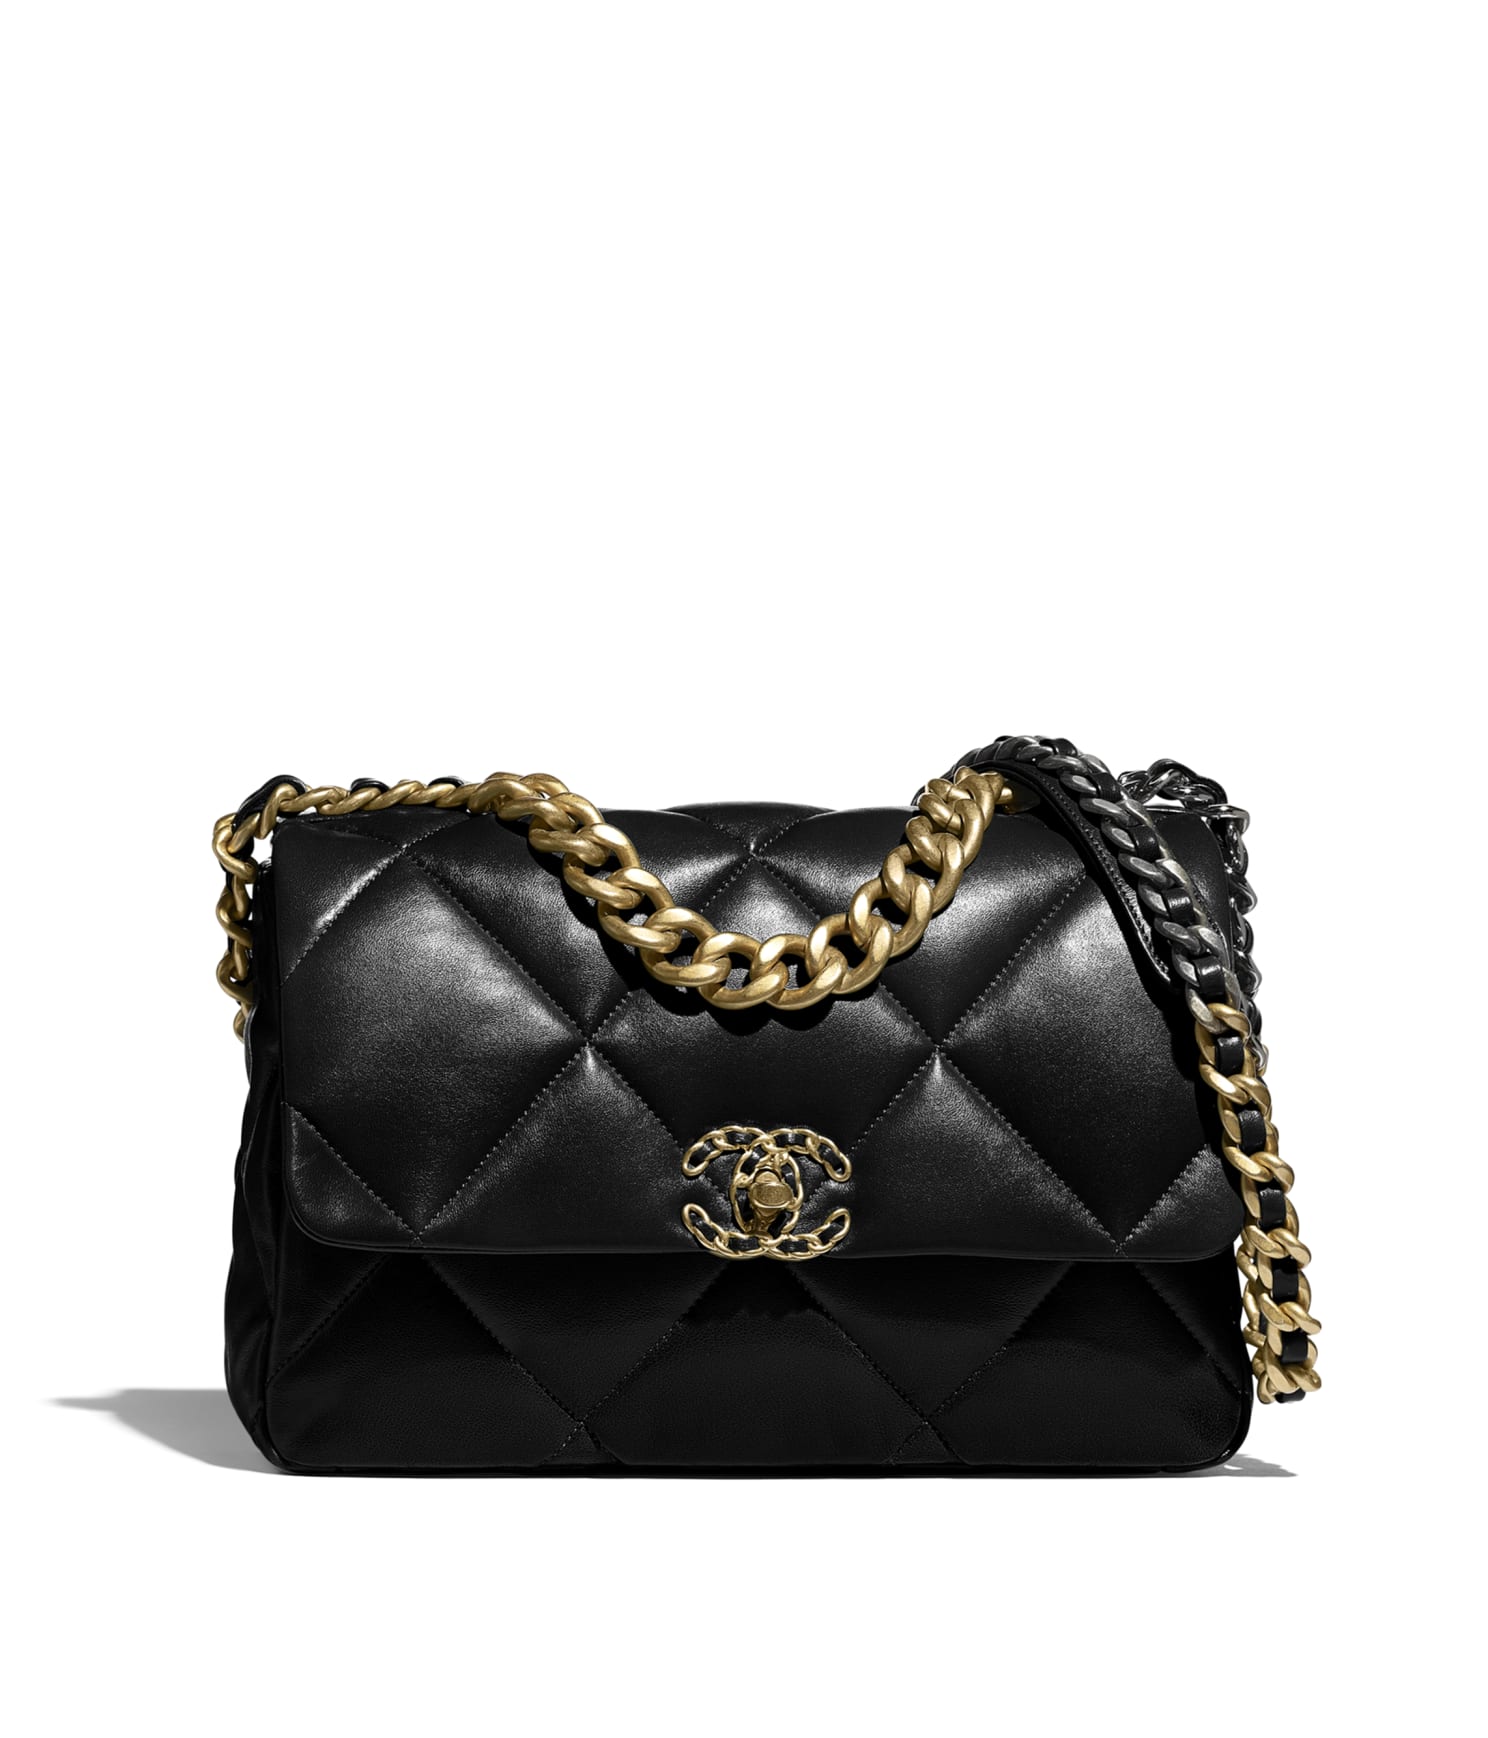 At regere folder Playful Chanel - Medium (Large) Chanel 19 Flap Bag - Luxe Front